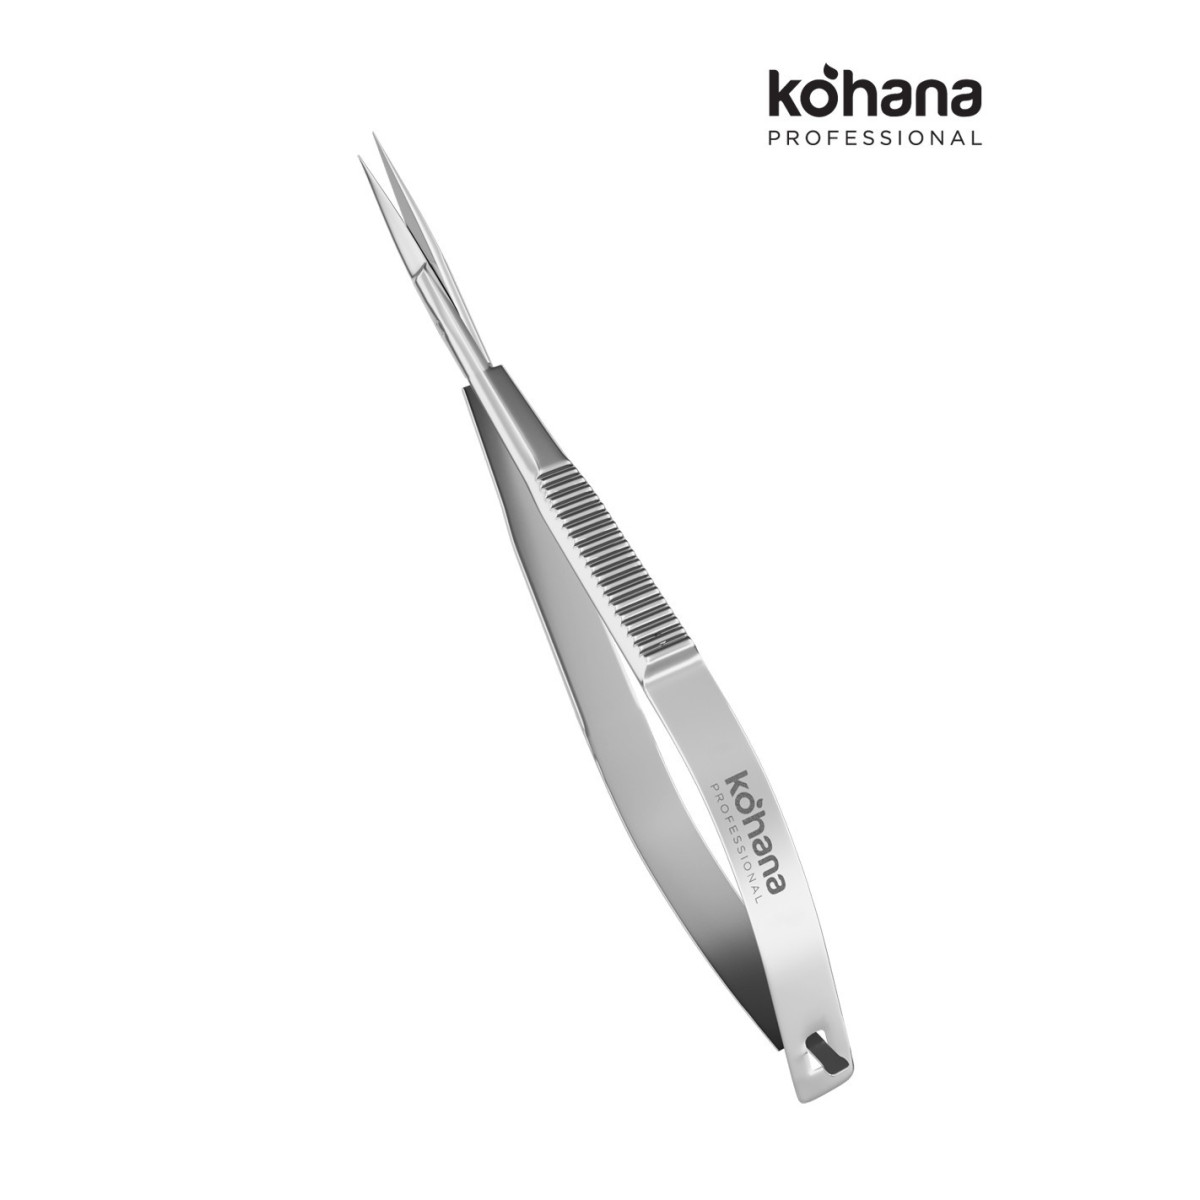 Kohana Professional Forms Scissors Modern